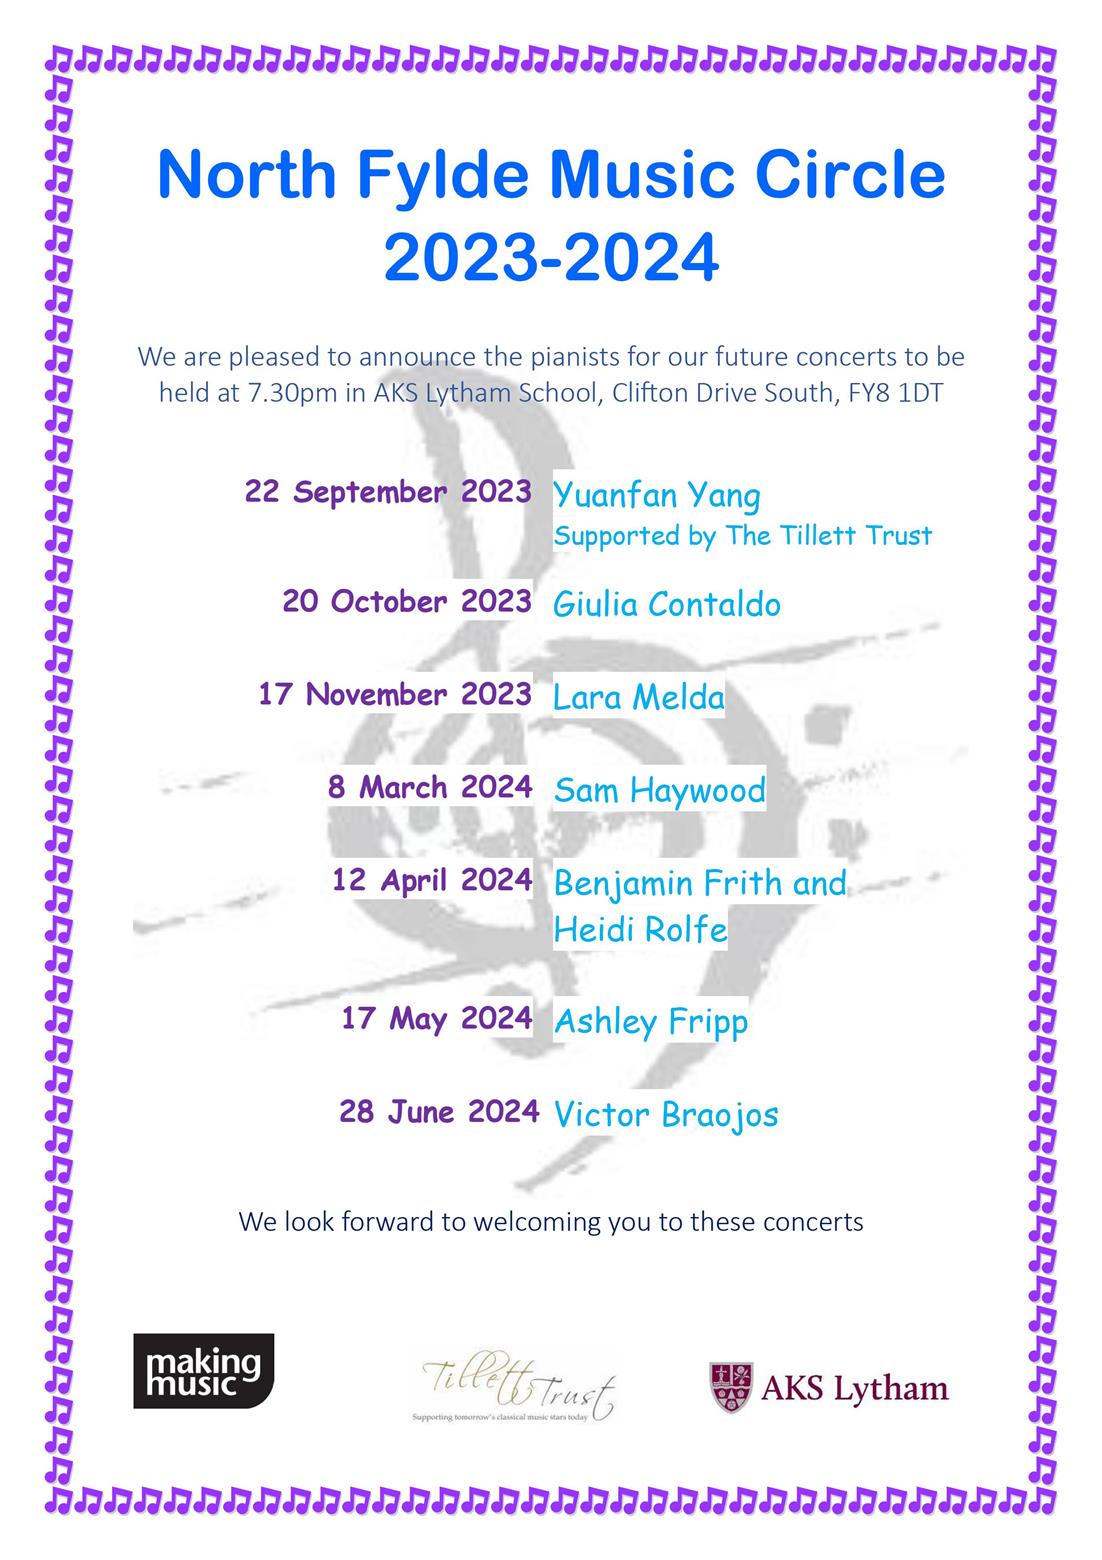 North Fylde Music Circle - 2023/4 concert dates